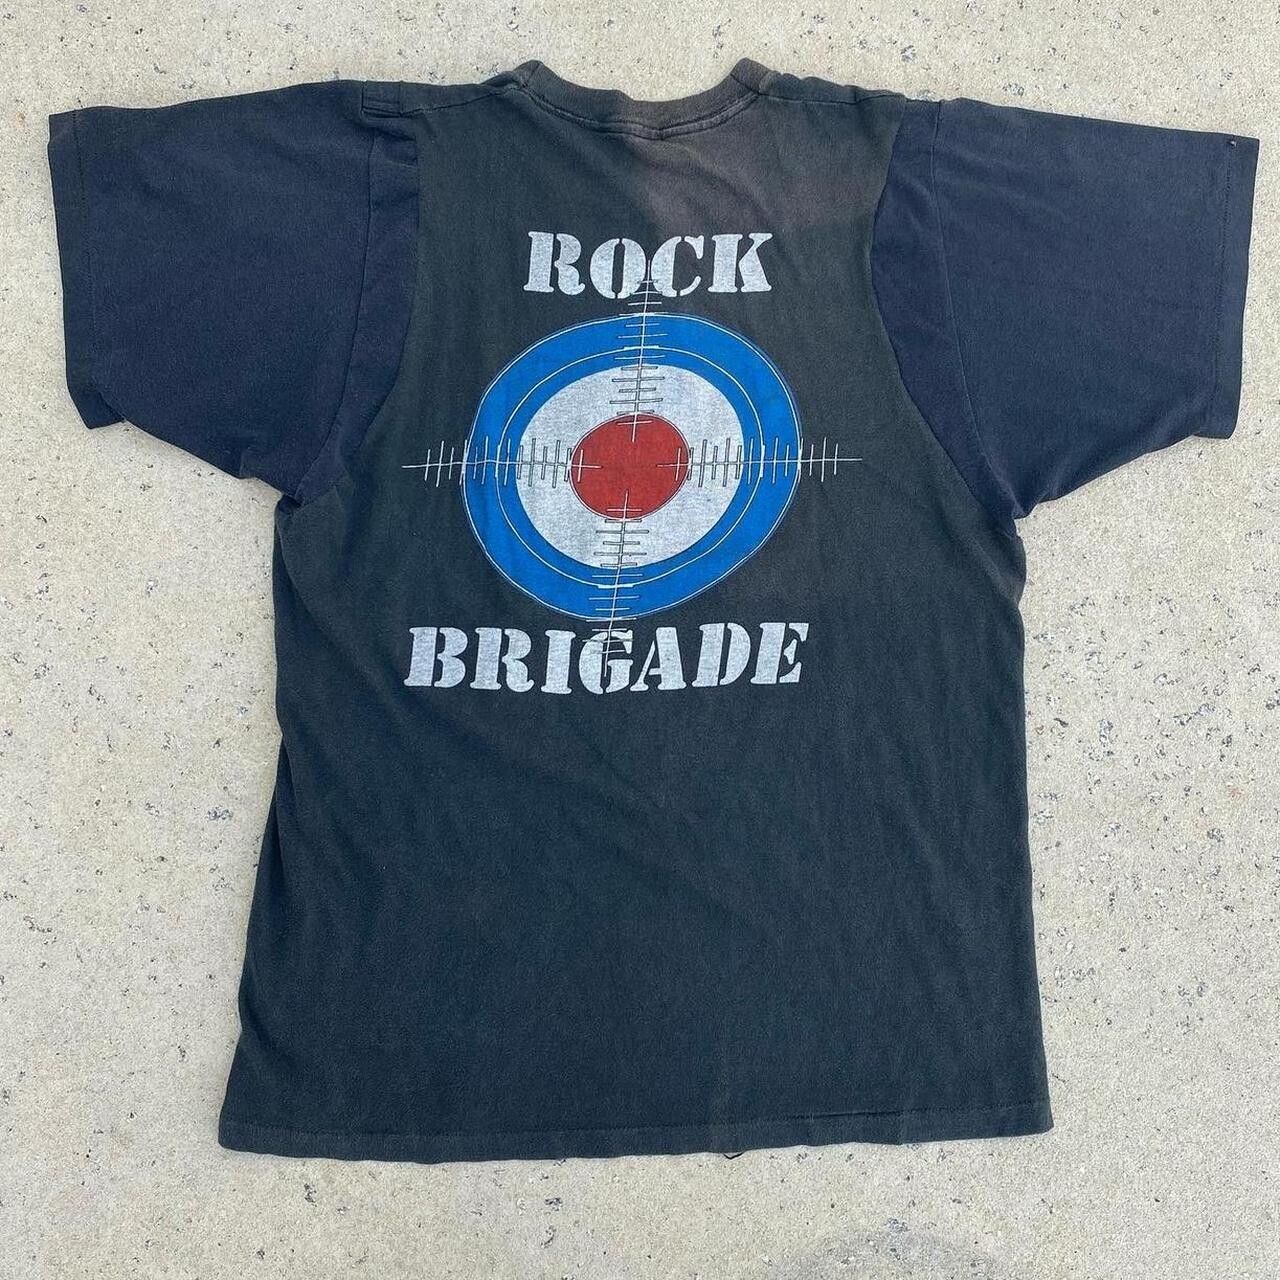 Band Tees VINTAGE 1983 DEF LEPPARD “Rock Brigade” T SHIRT Size US XL / EU 56 / 4 - 2 Preview